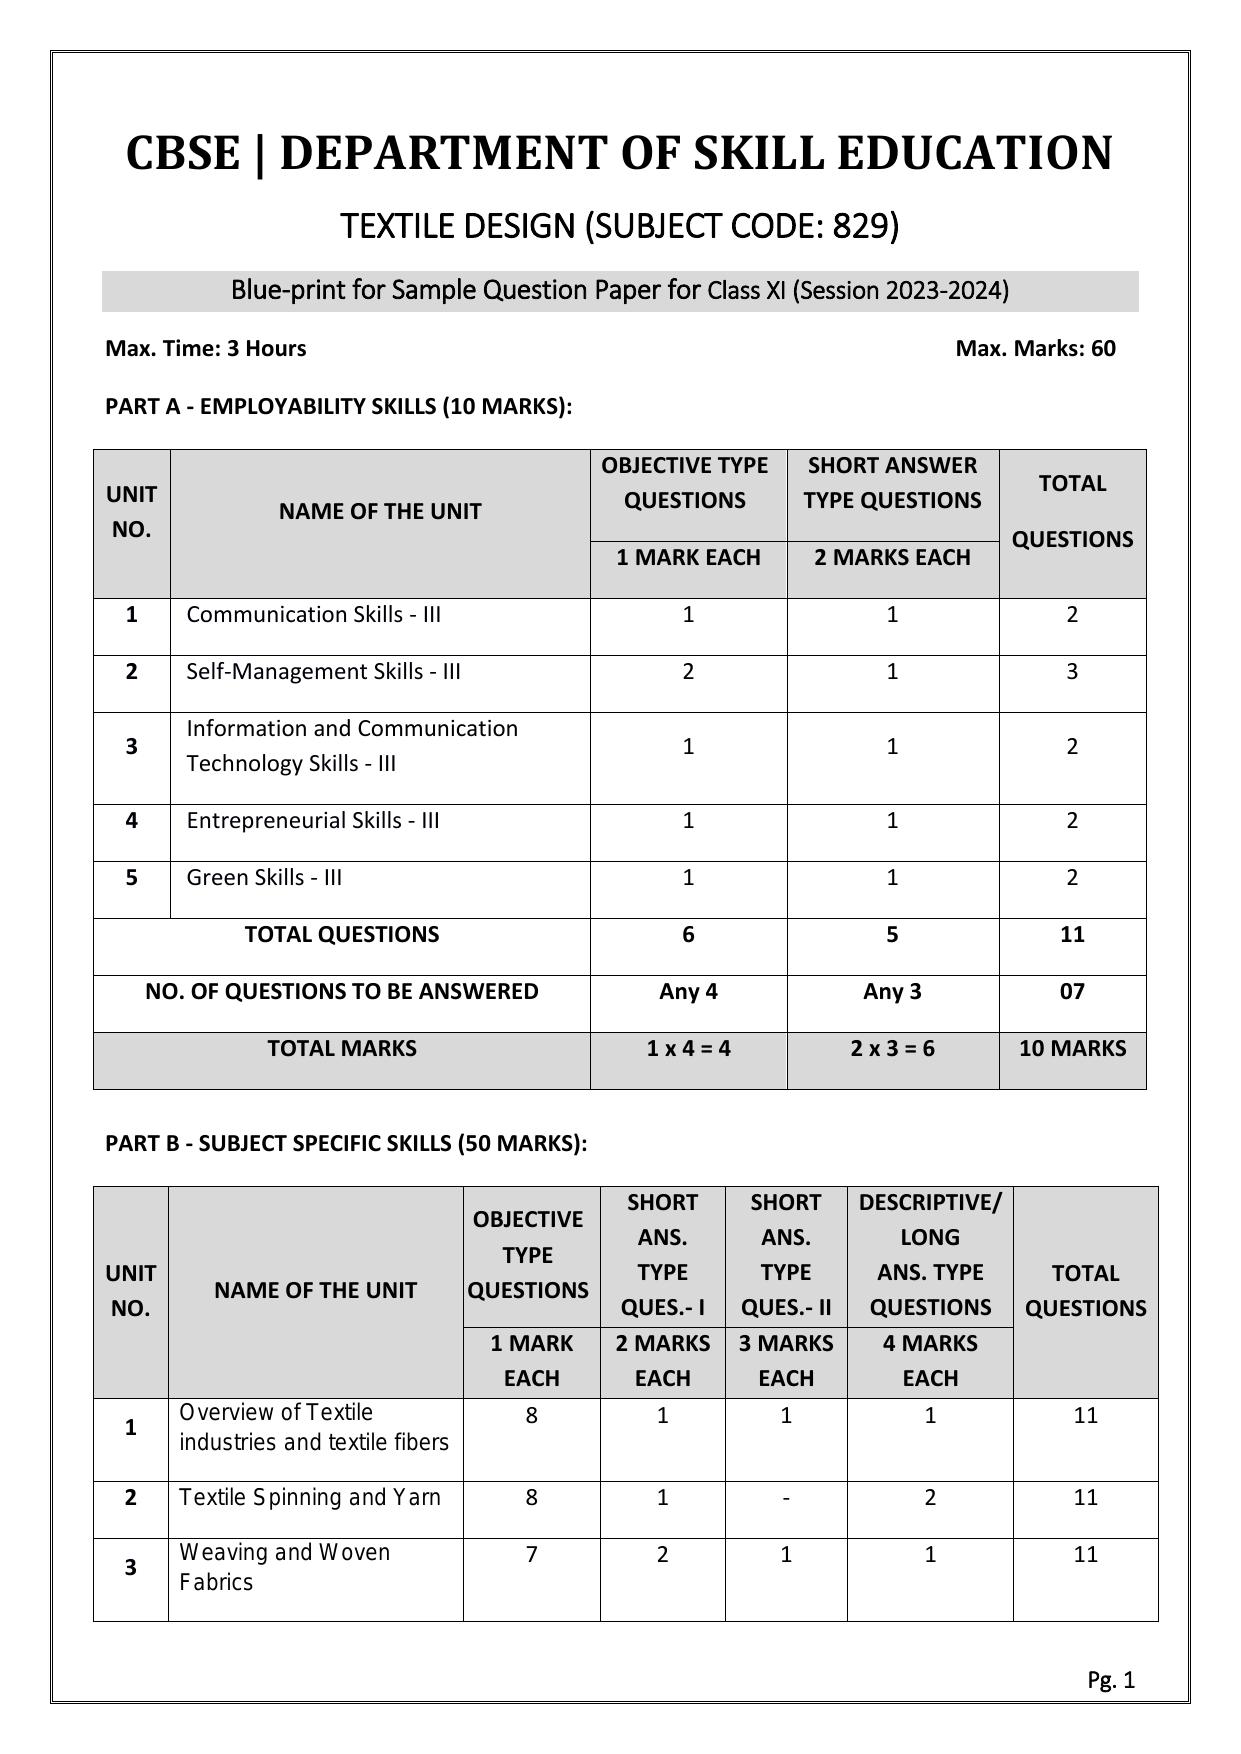 CBSE Class 11: TEXTILE DESIGN 2024 Sample Paper - Page 1